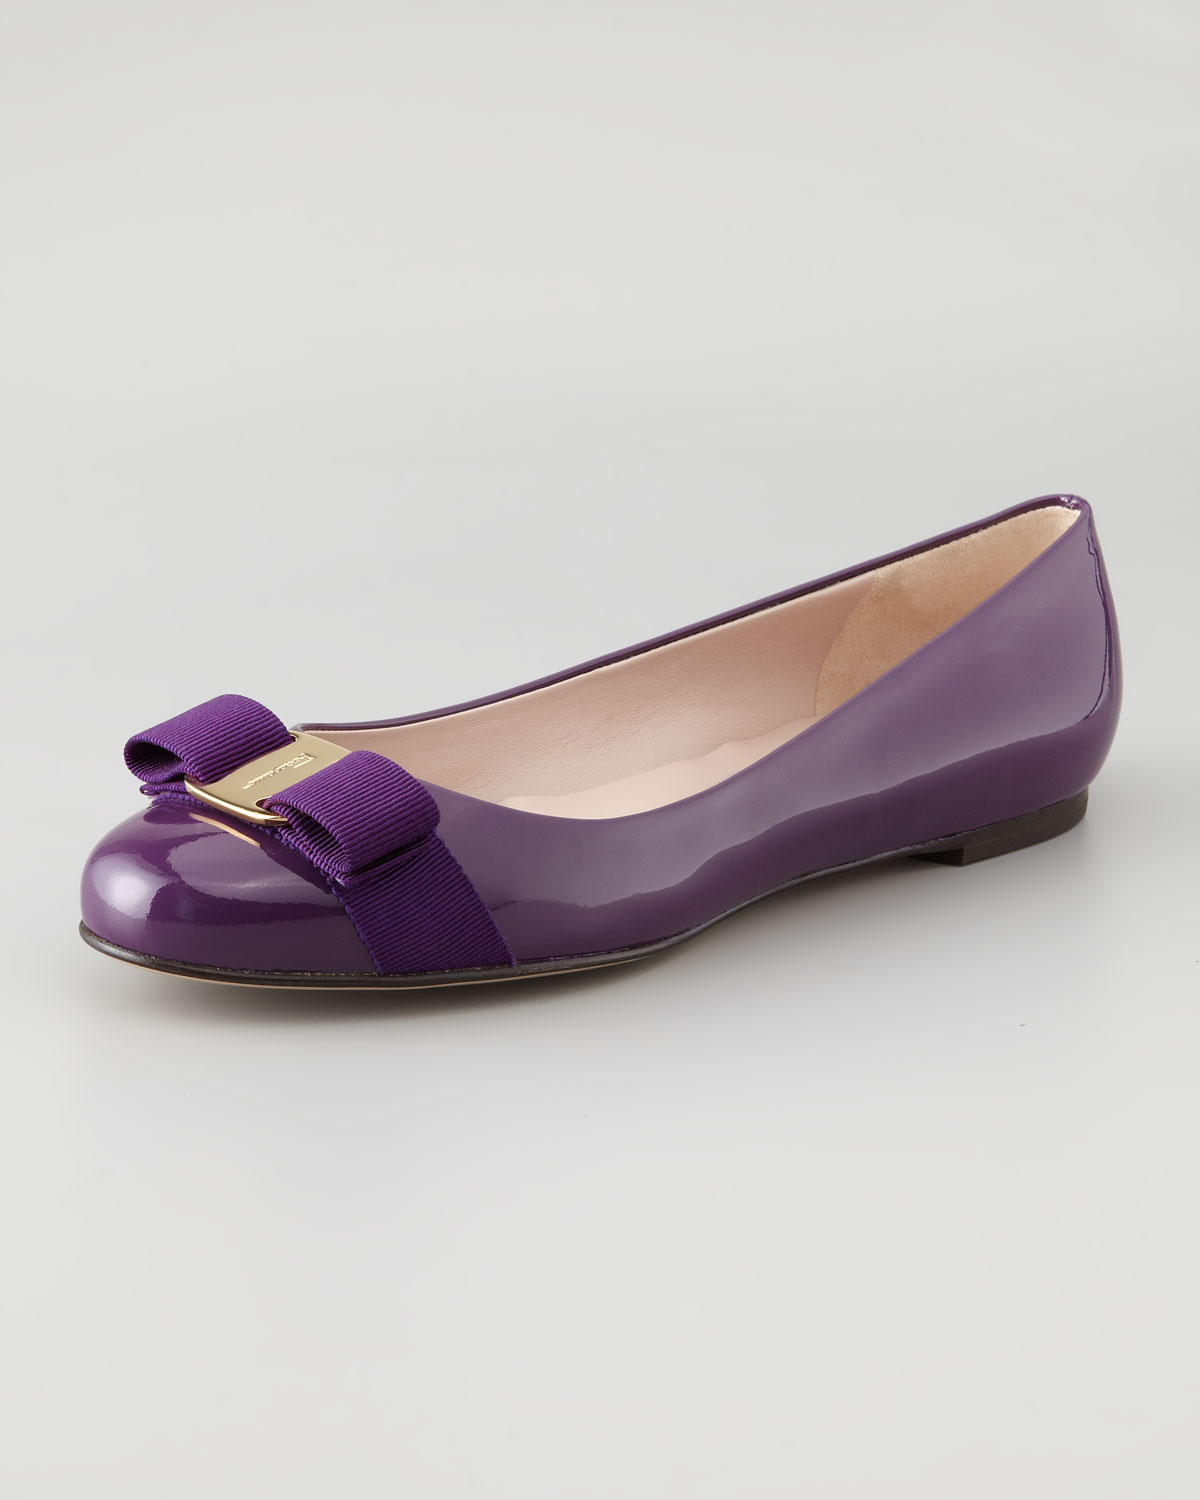 Lyst - Ferragamo Varina Patent Ballerina Flat in Purple